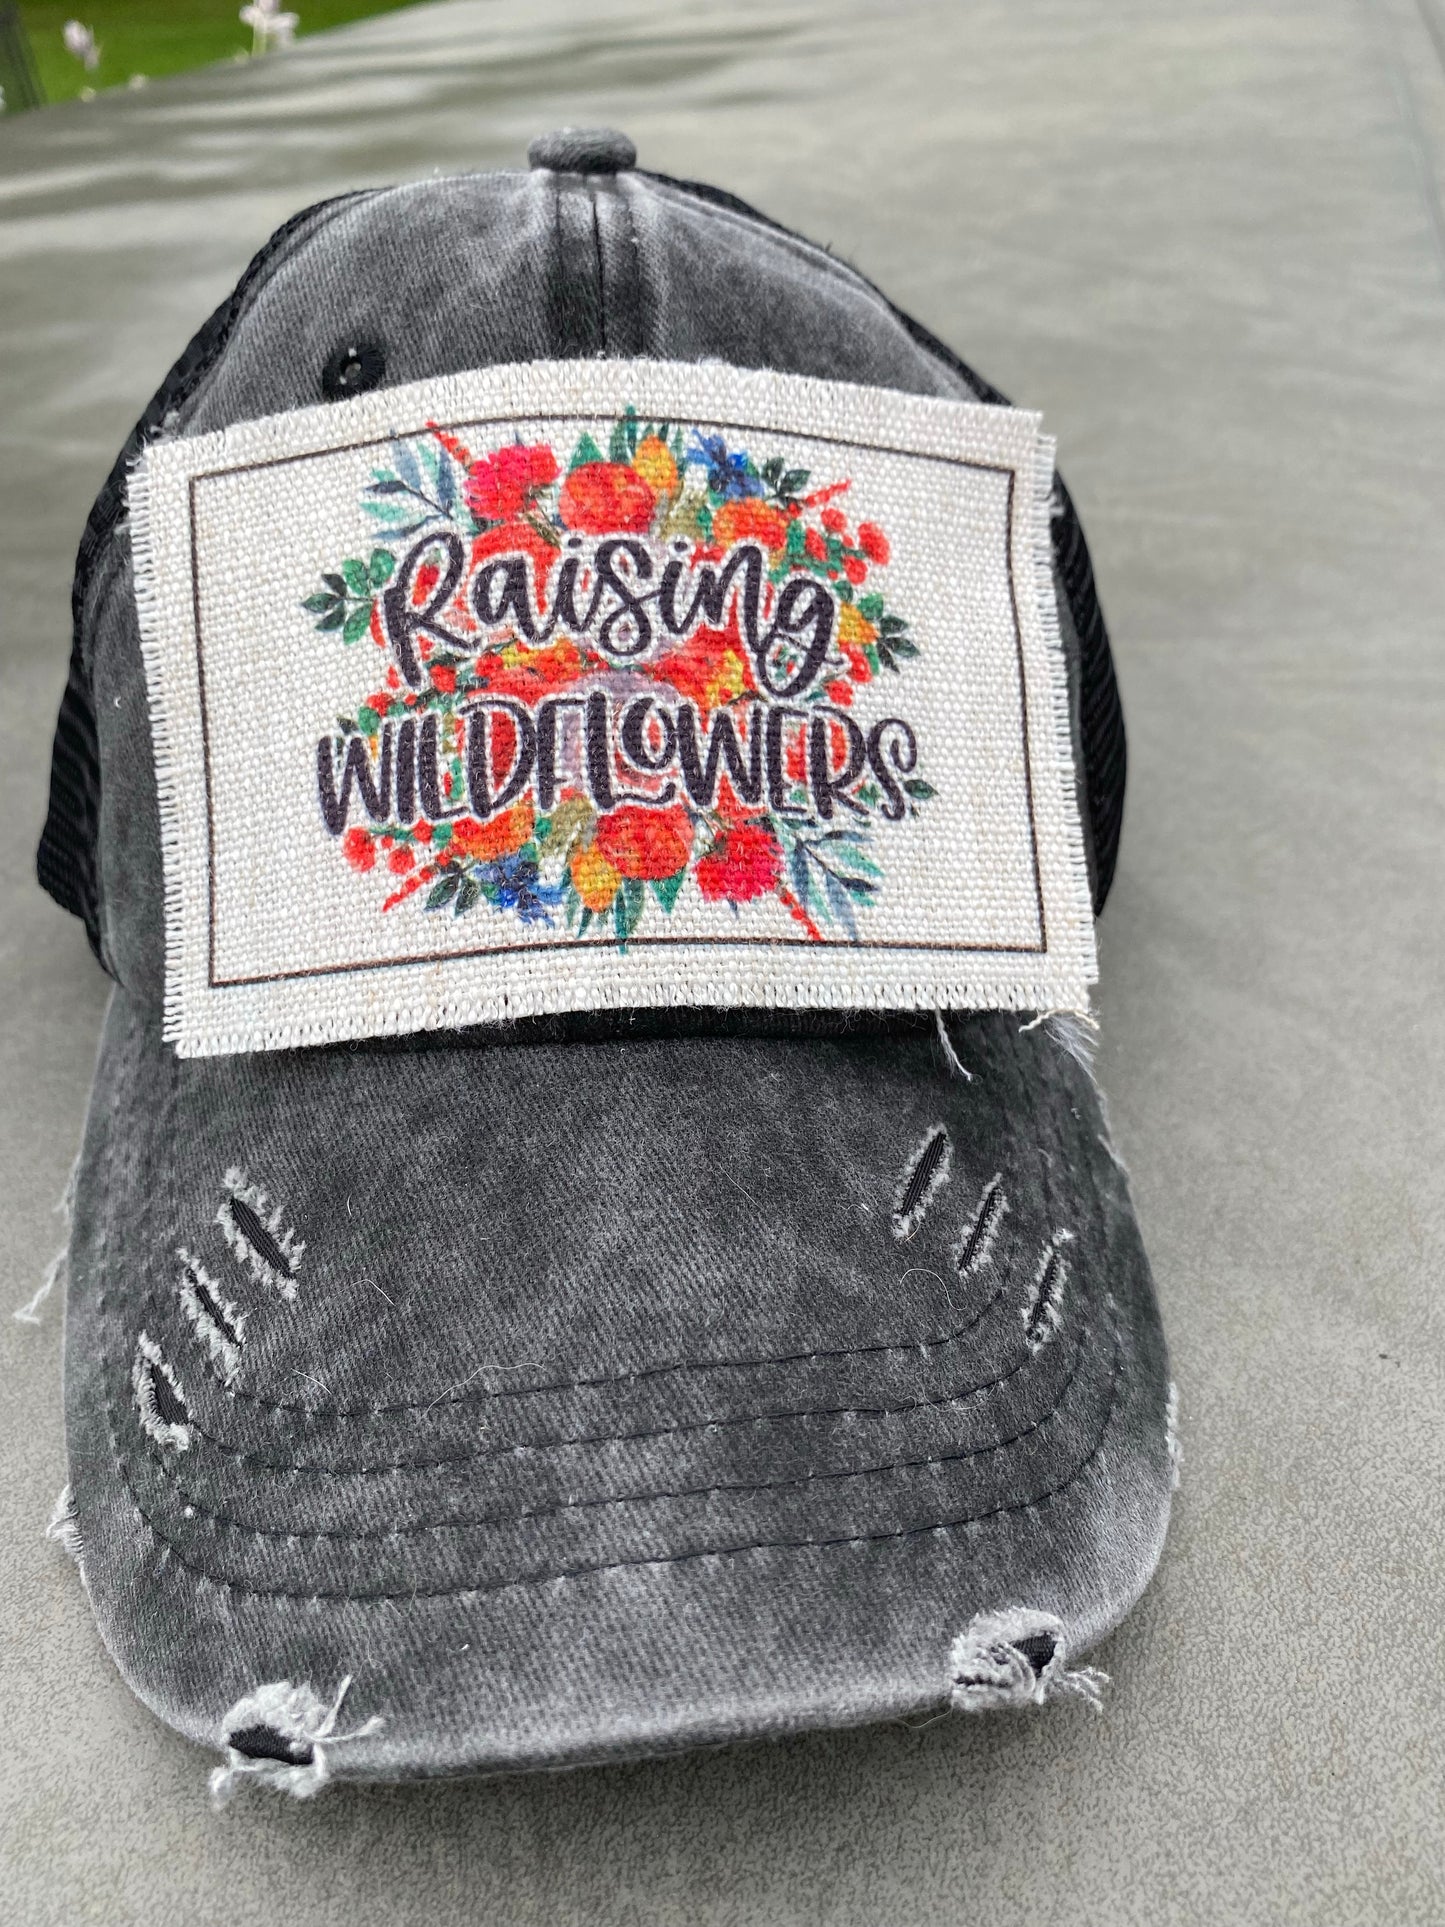 Raising Wildflowers Hat Patch